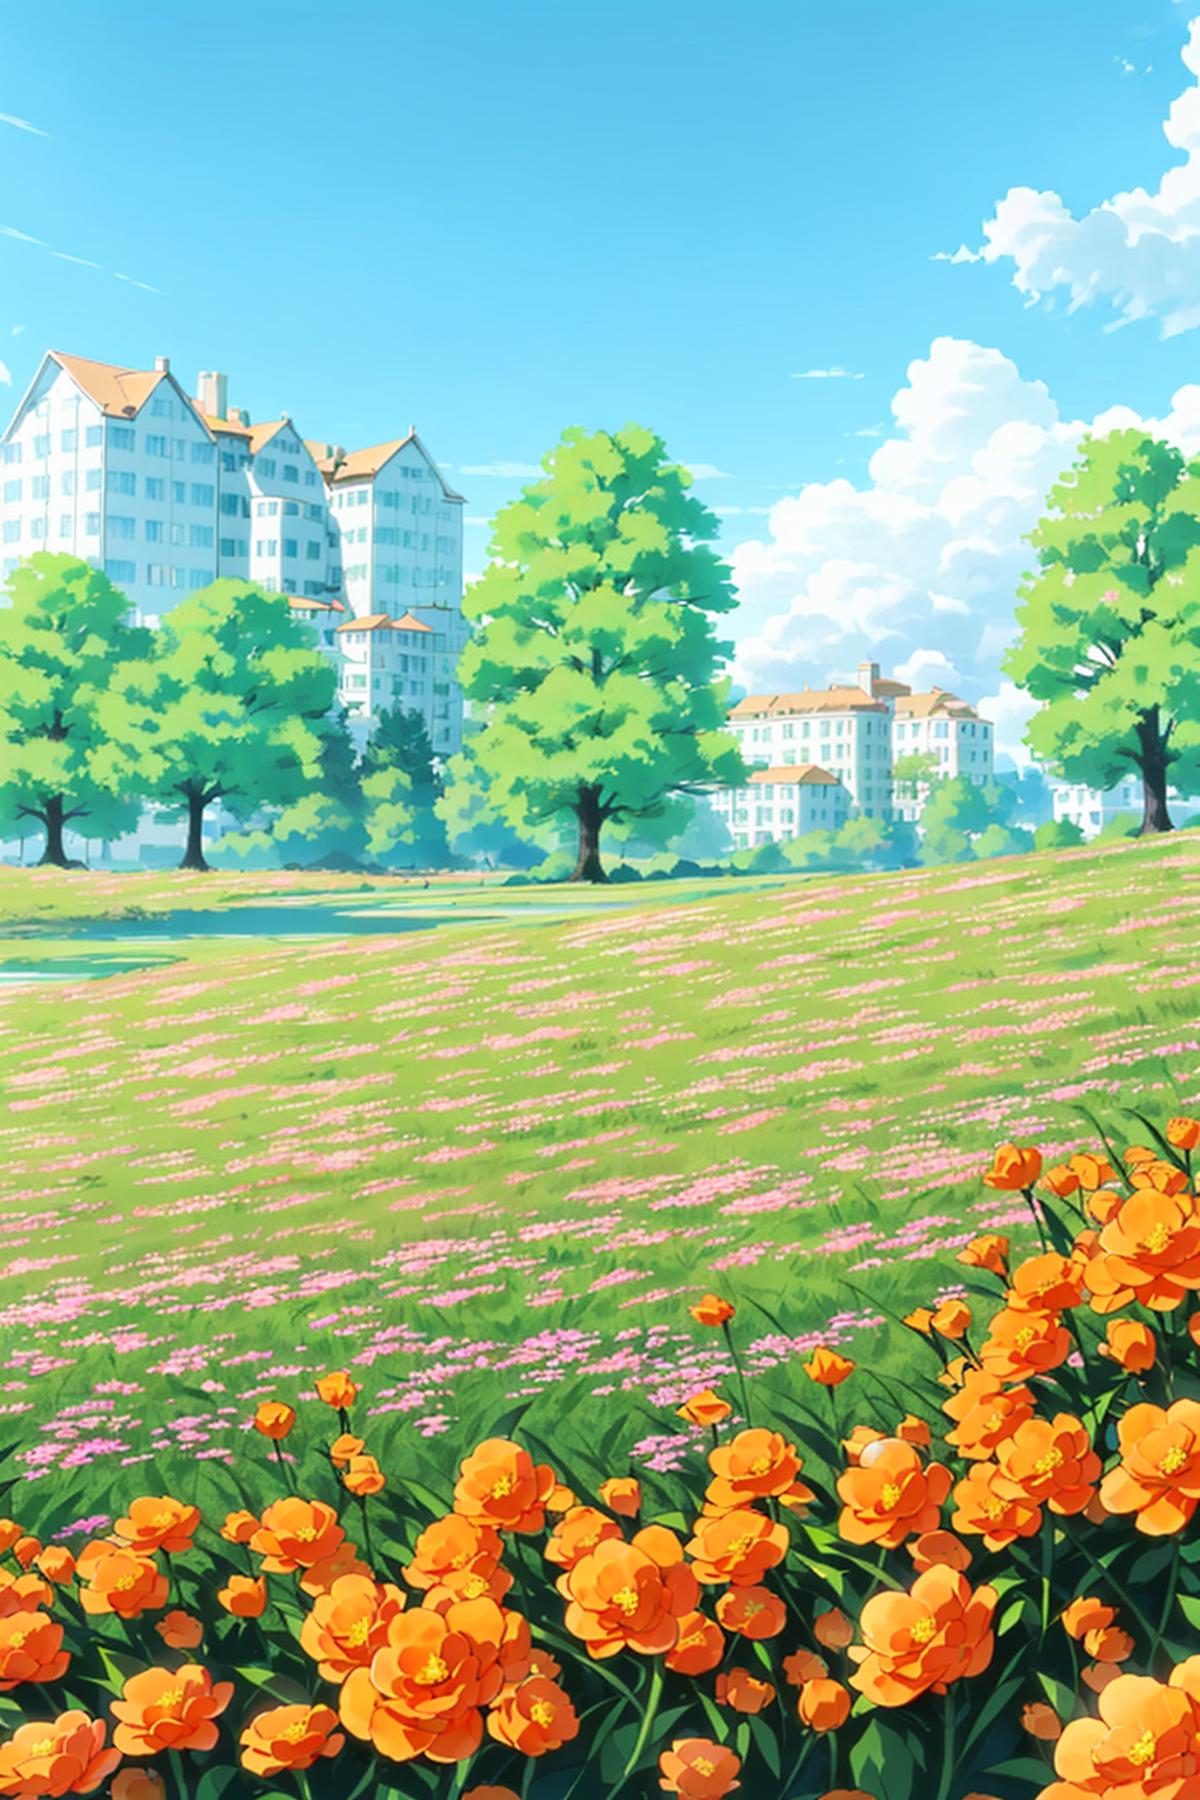 Flower field image by nnna